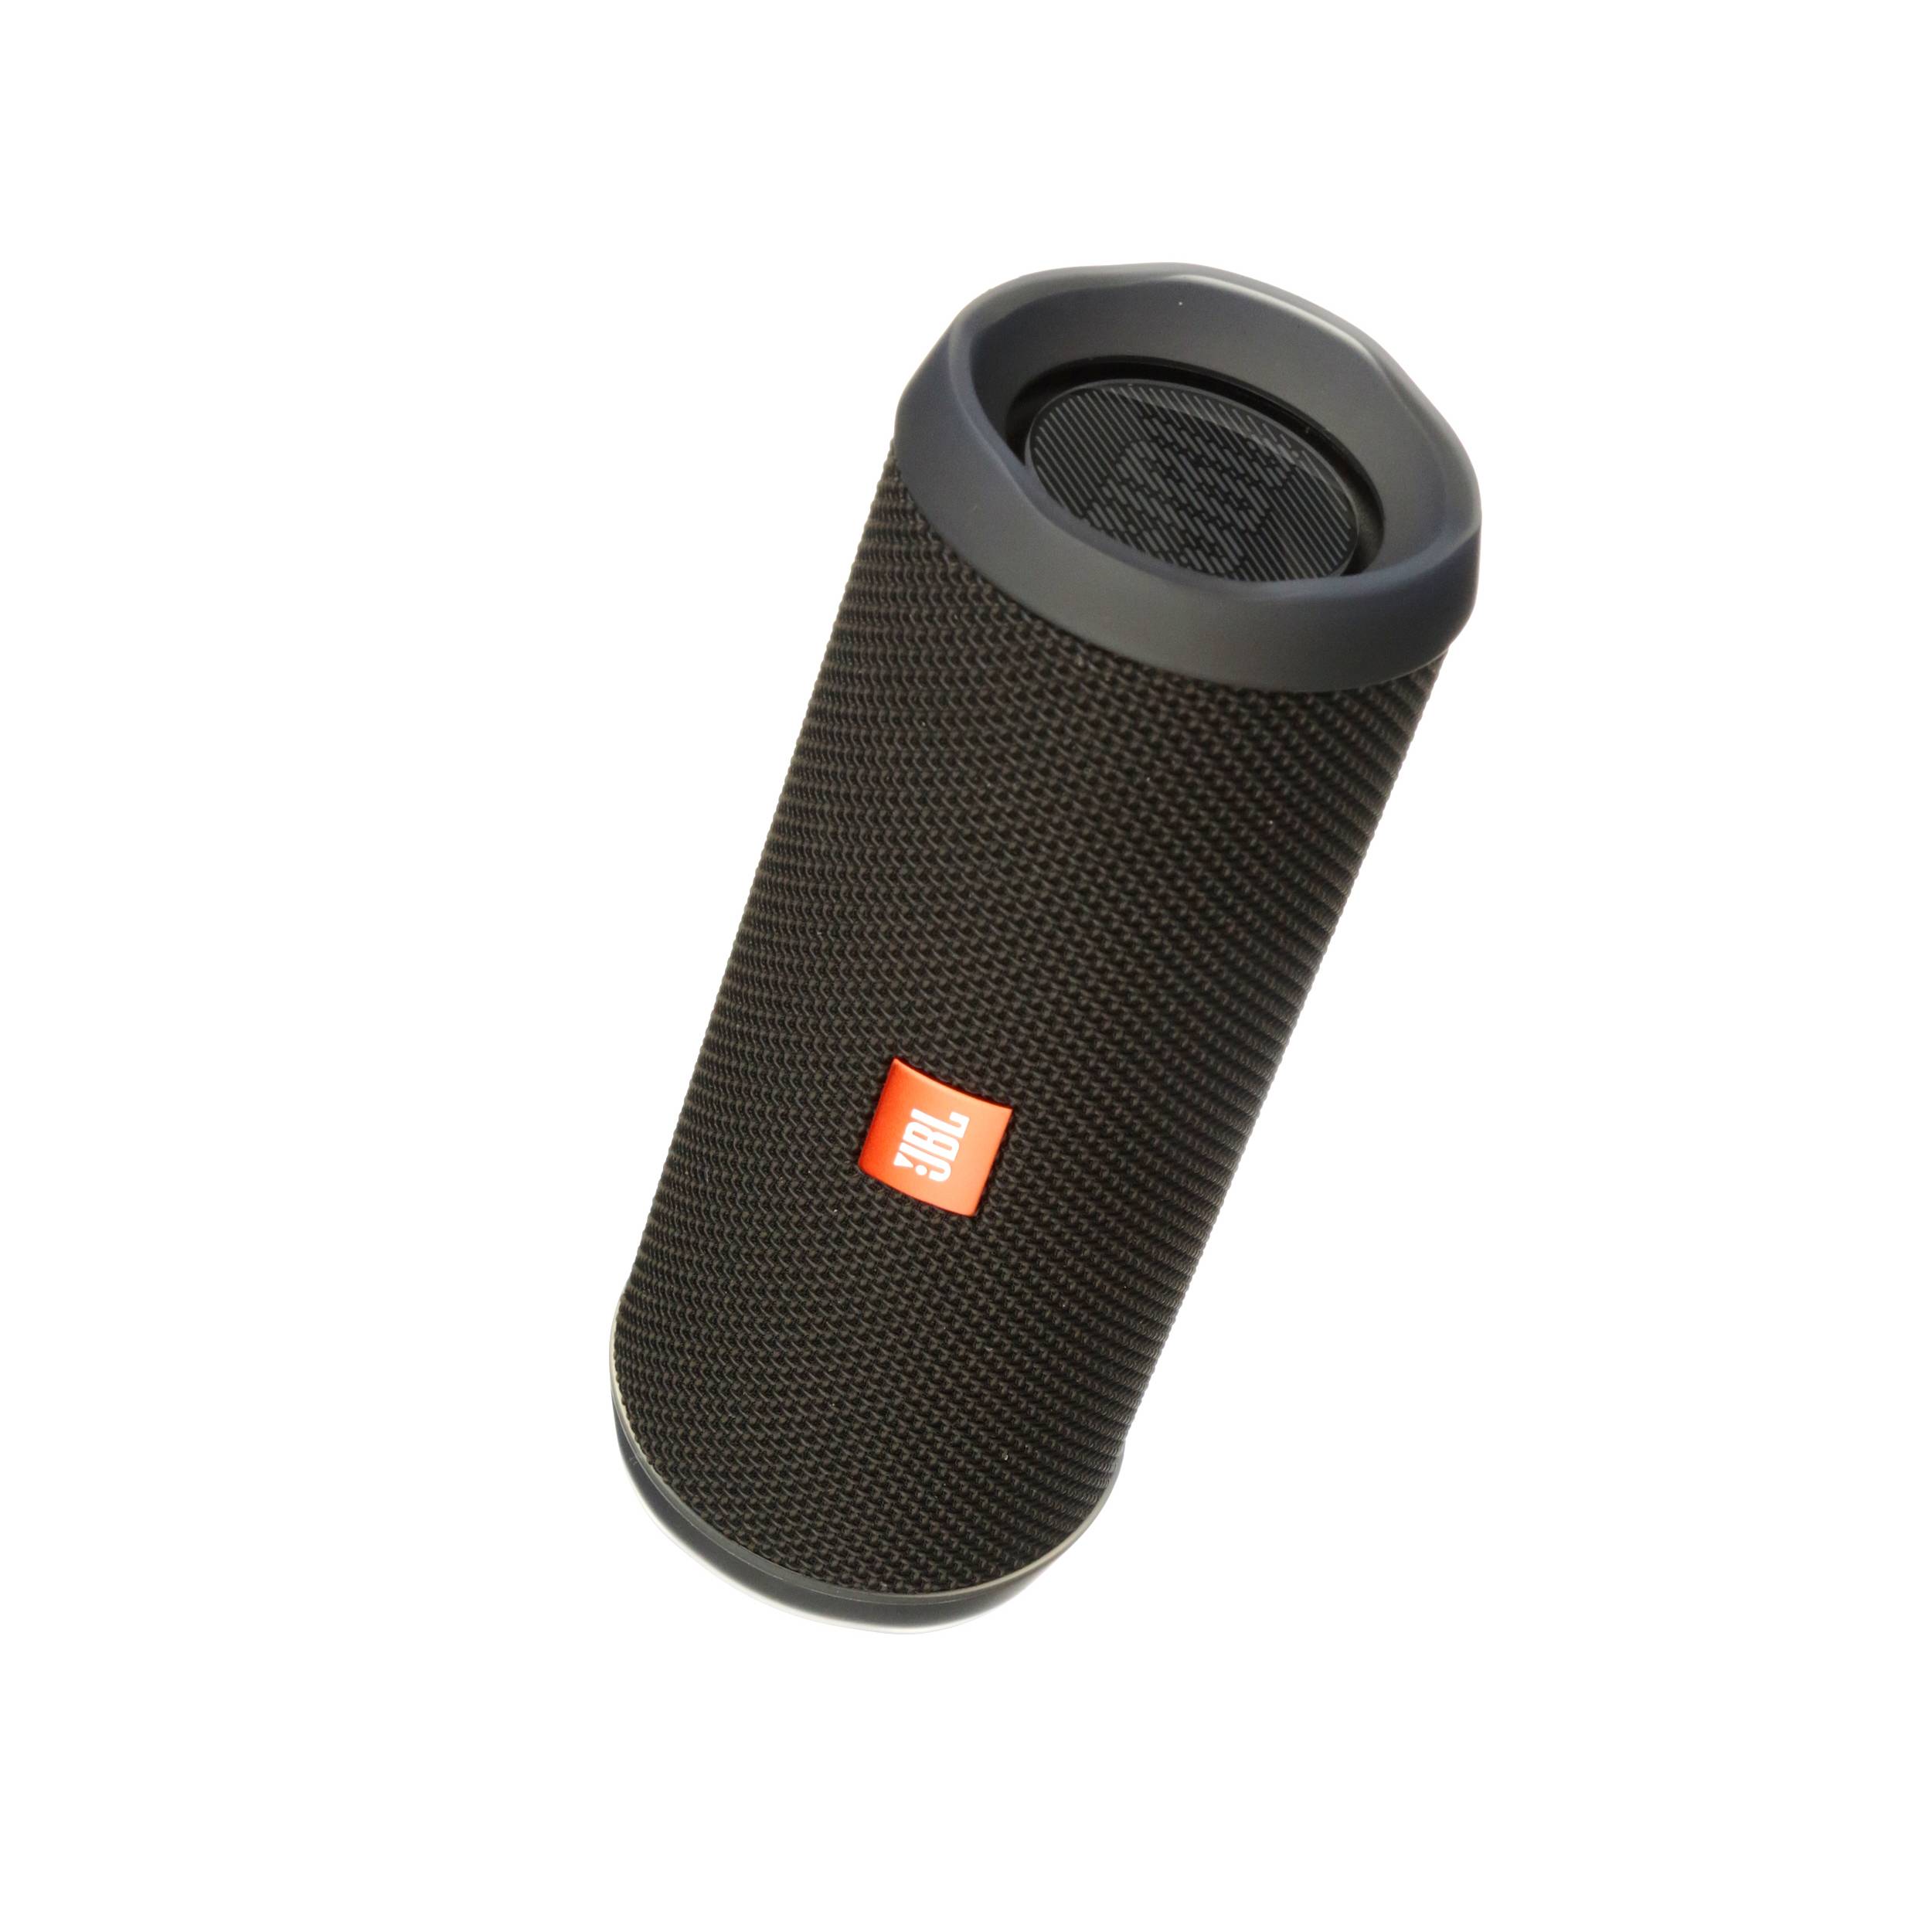 JBL Flip 4 Bluetooth speaker gets improved sound, full waterproofing - CNET